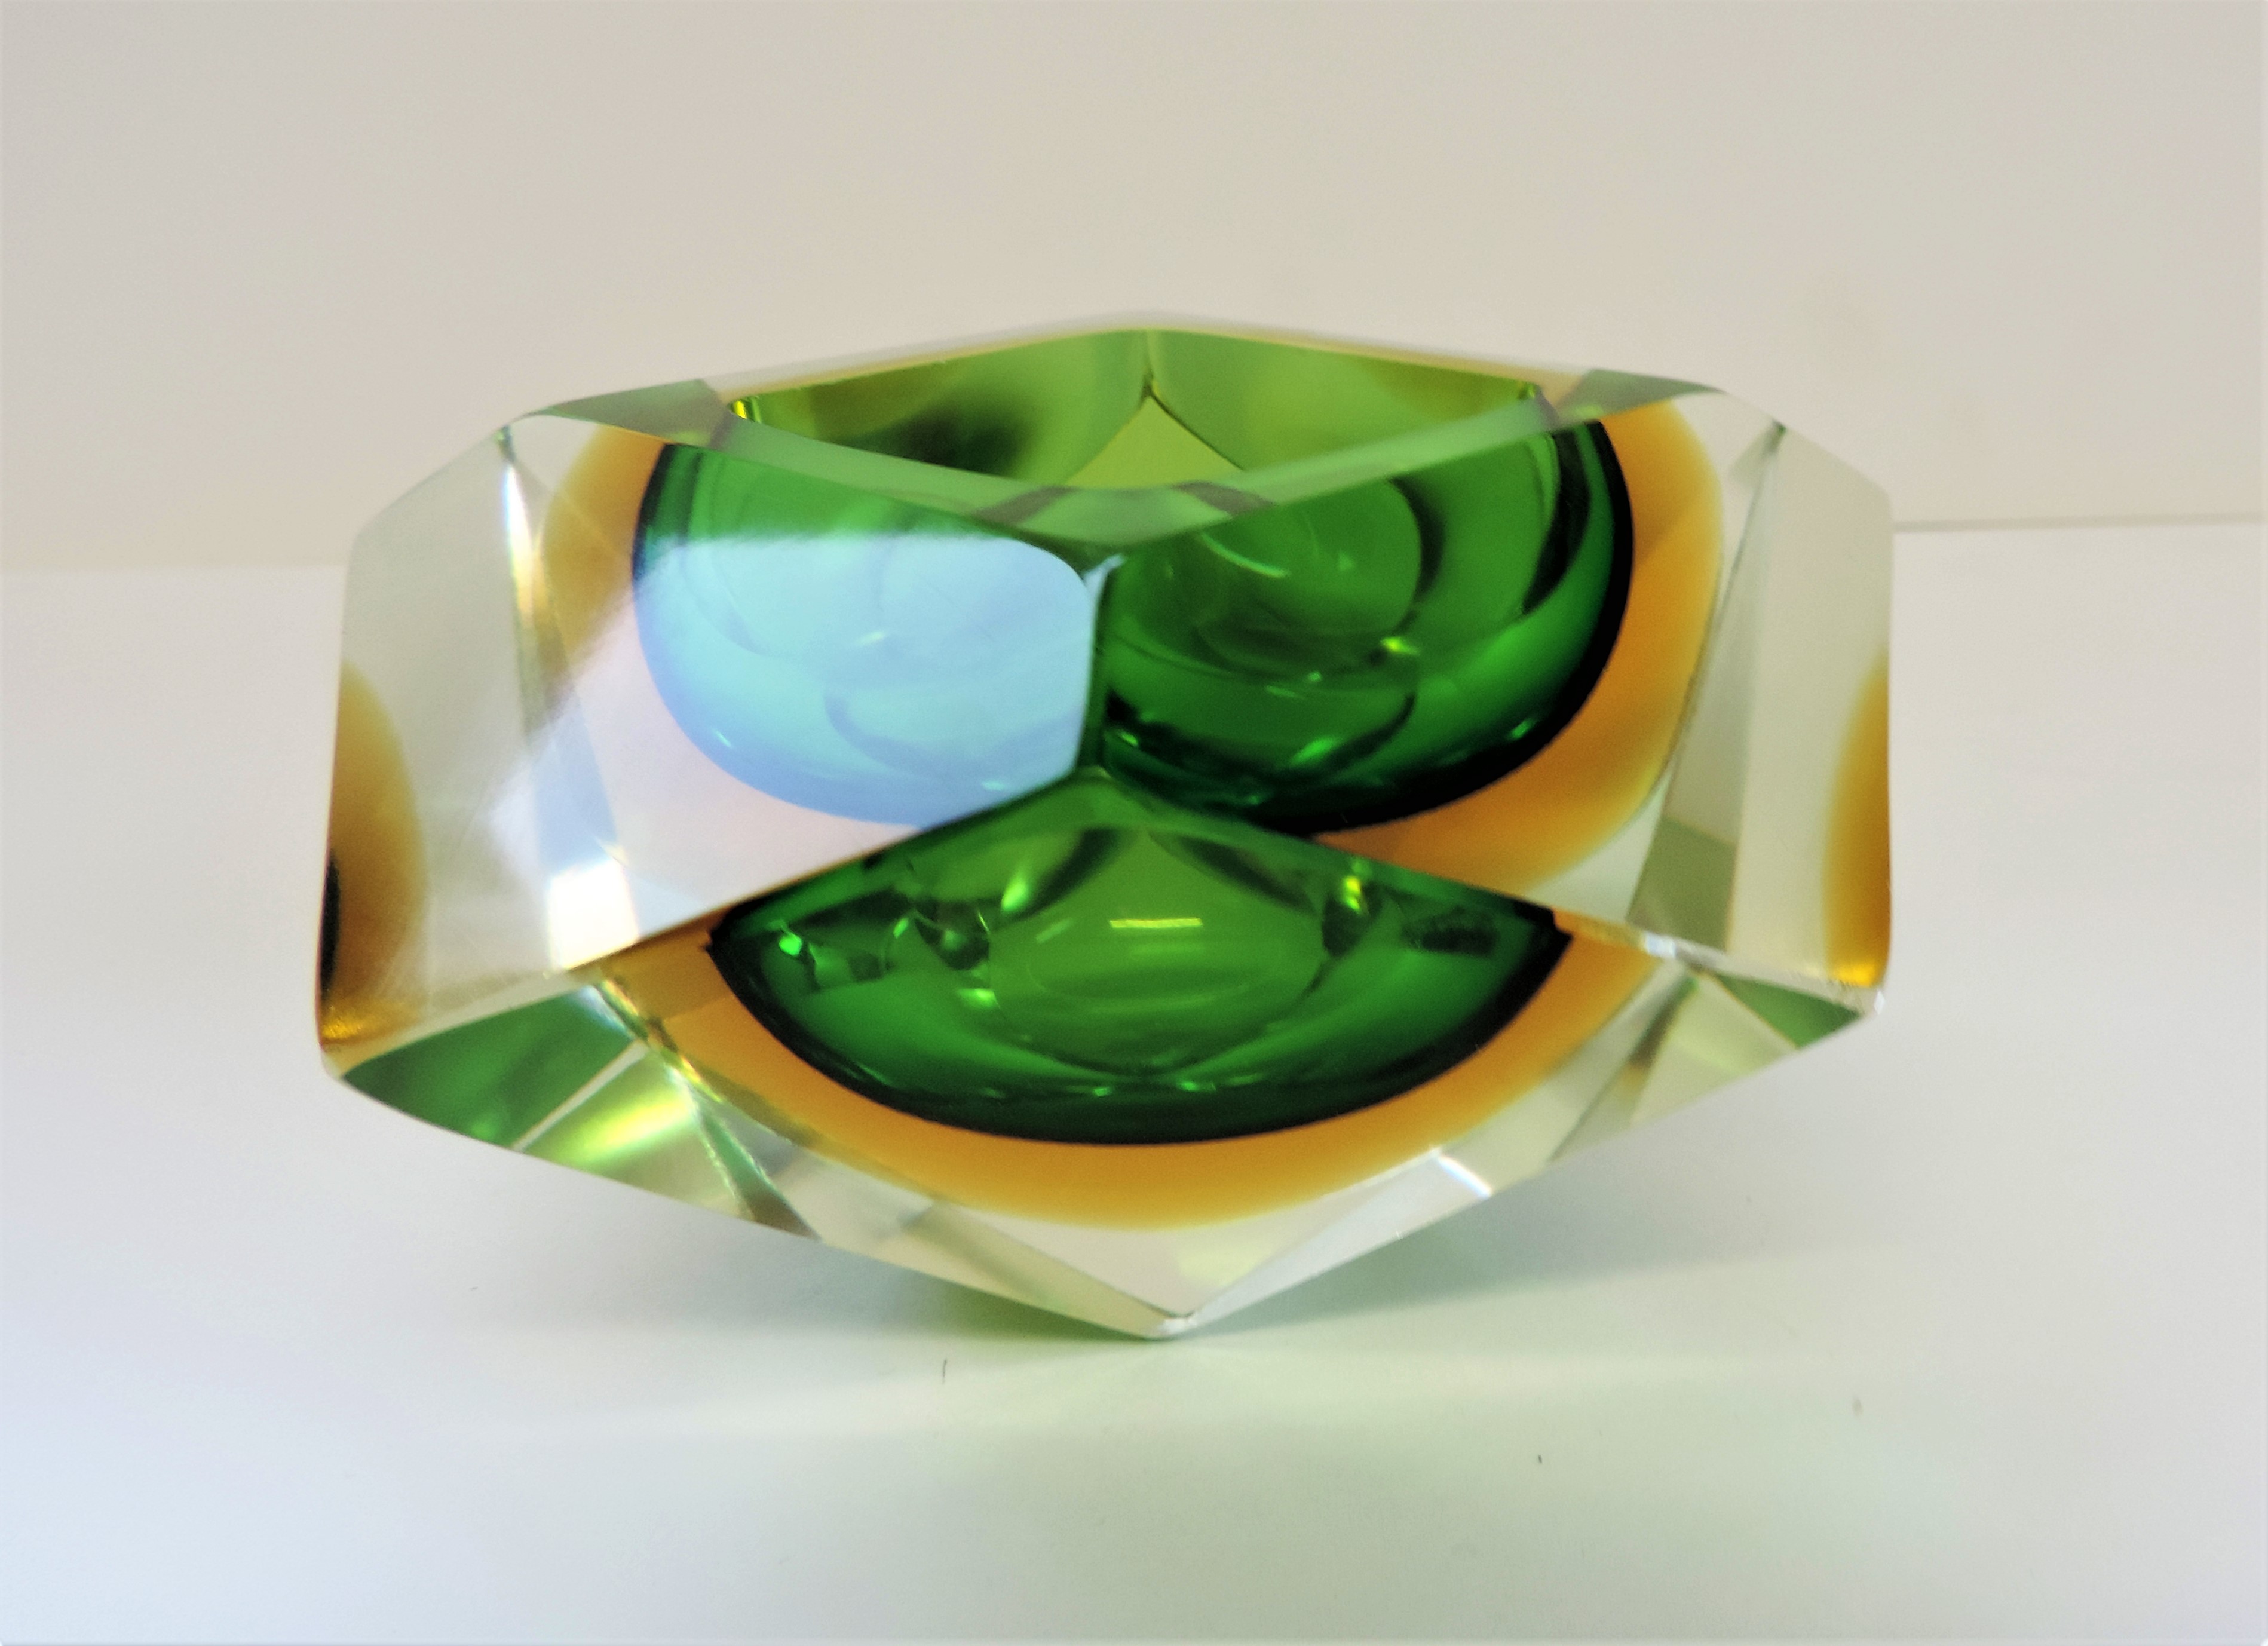 Mandruzzato Murano Faceted Glass Paperweight - Image 2 of 5